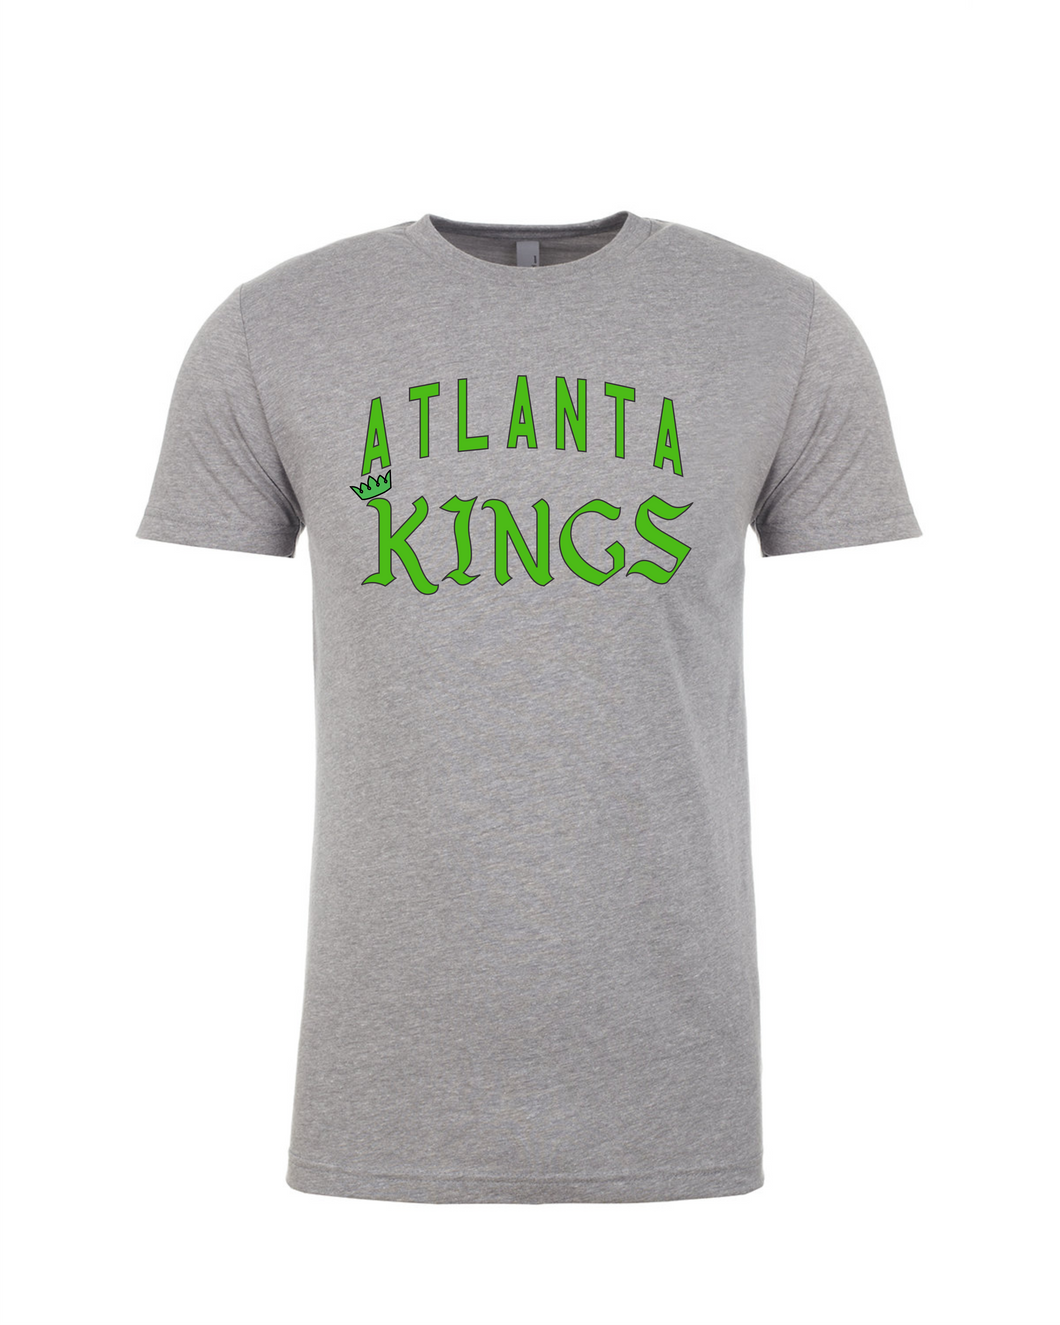 ATL-KINGS-601-3 - Next Level Unisex CVC Crewneck T-Shirt - Atlanta KINGS Arch Logo